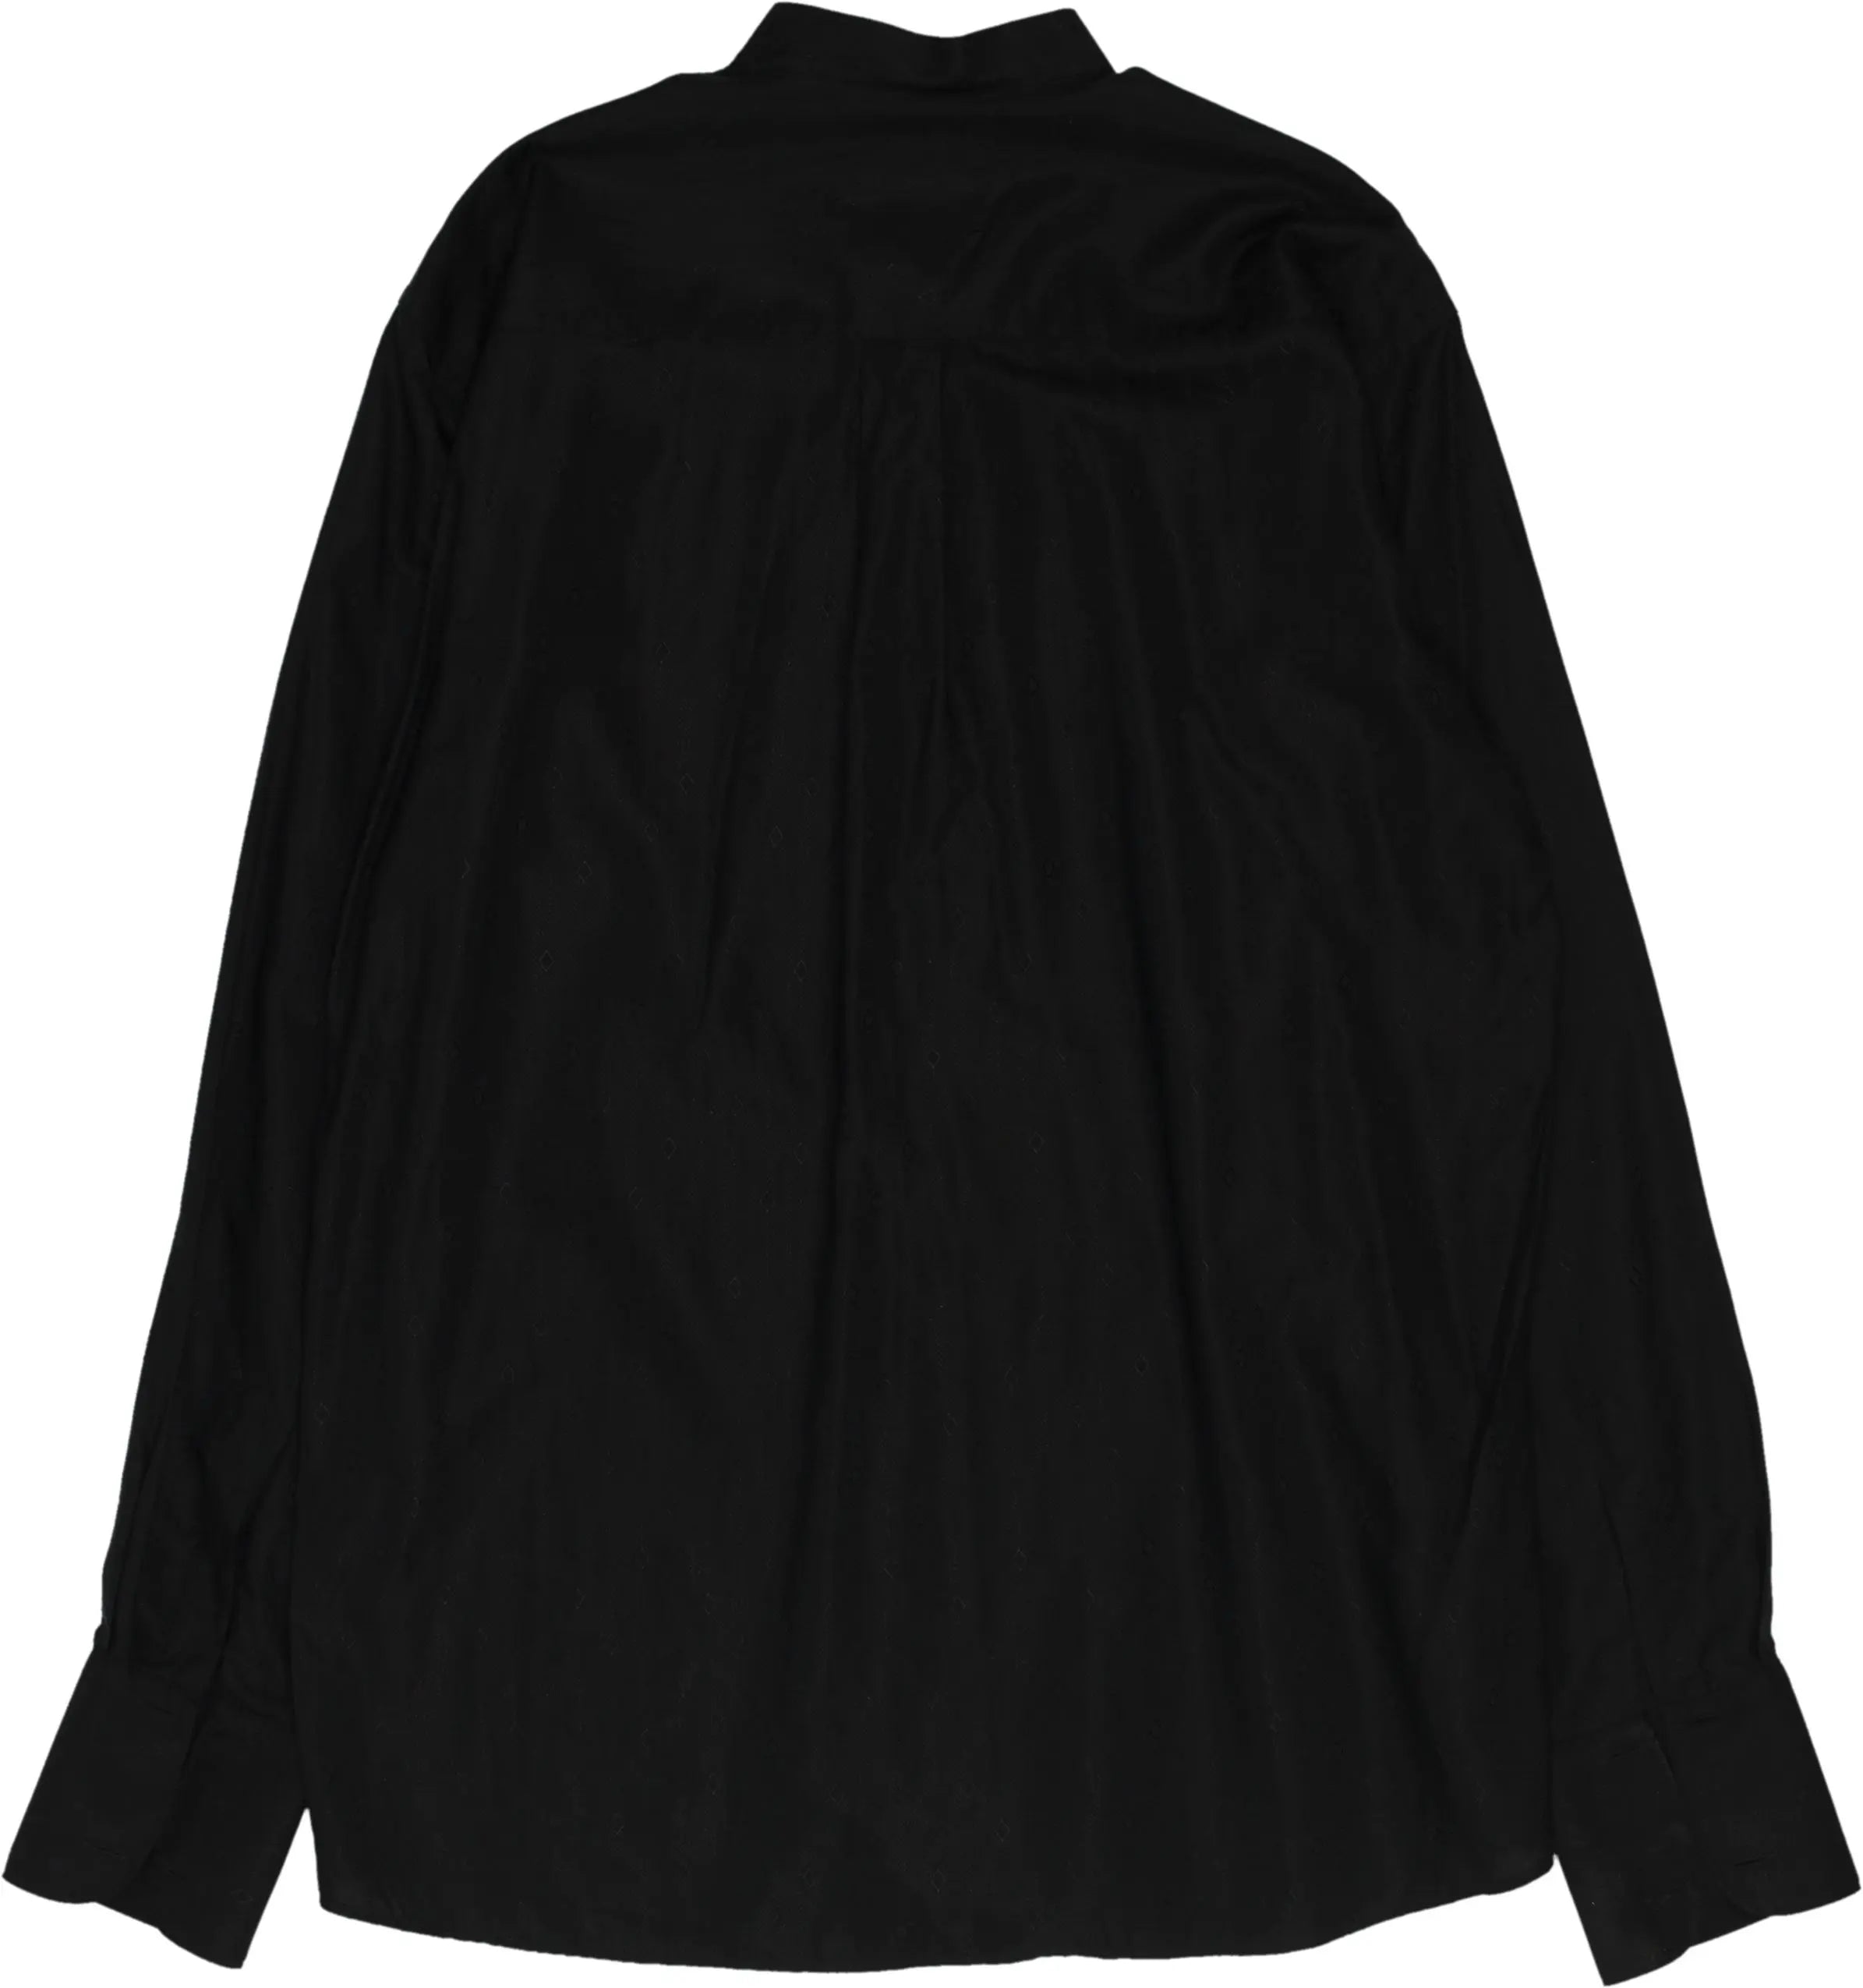 Karl Helmold - Black Shirt by Karl Helmold- ThriftTale.com - Vintage and second handclothing